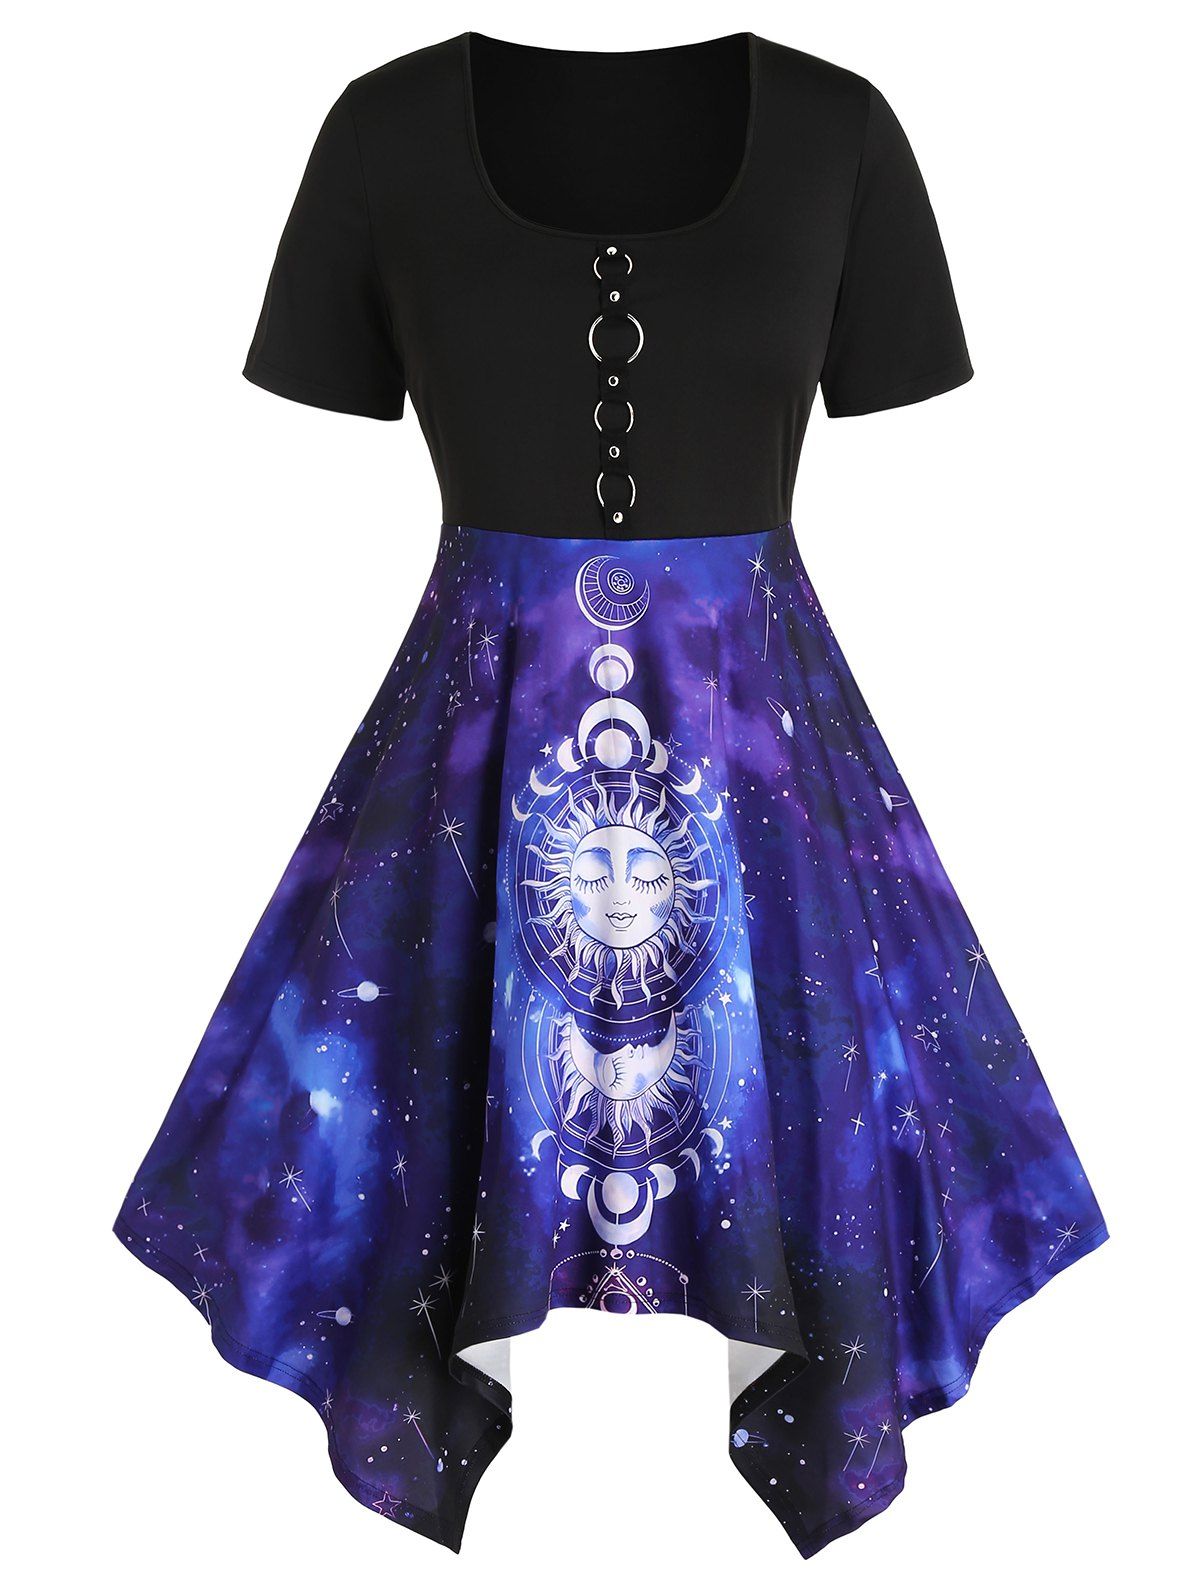 Plus Size & Curve Dress Celestial Sun And Moon Galaxy Print Dress O Ring Handkerchief Asymmetric Dress - BLACK 2X